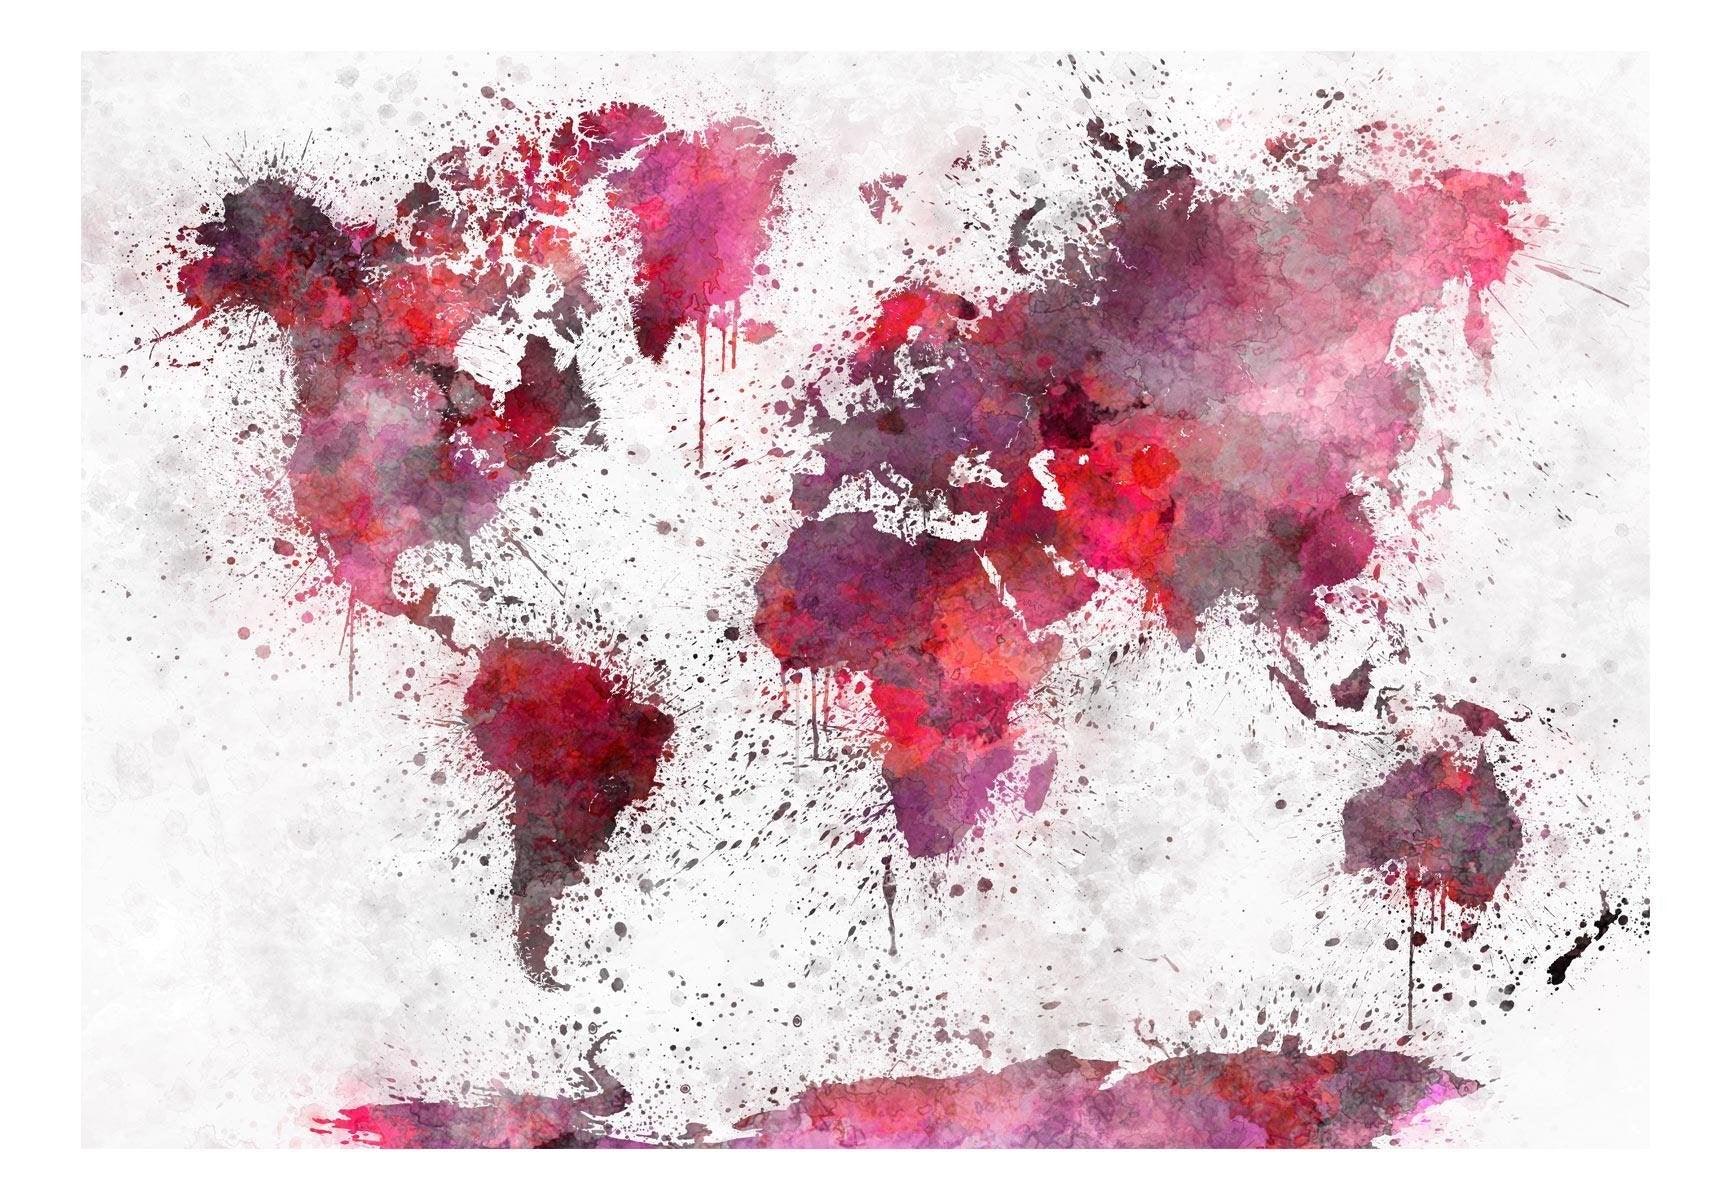 Peel and stick wall mural - World Map: Red Watercolors - www.trendingbestsellers.com